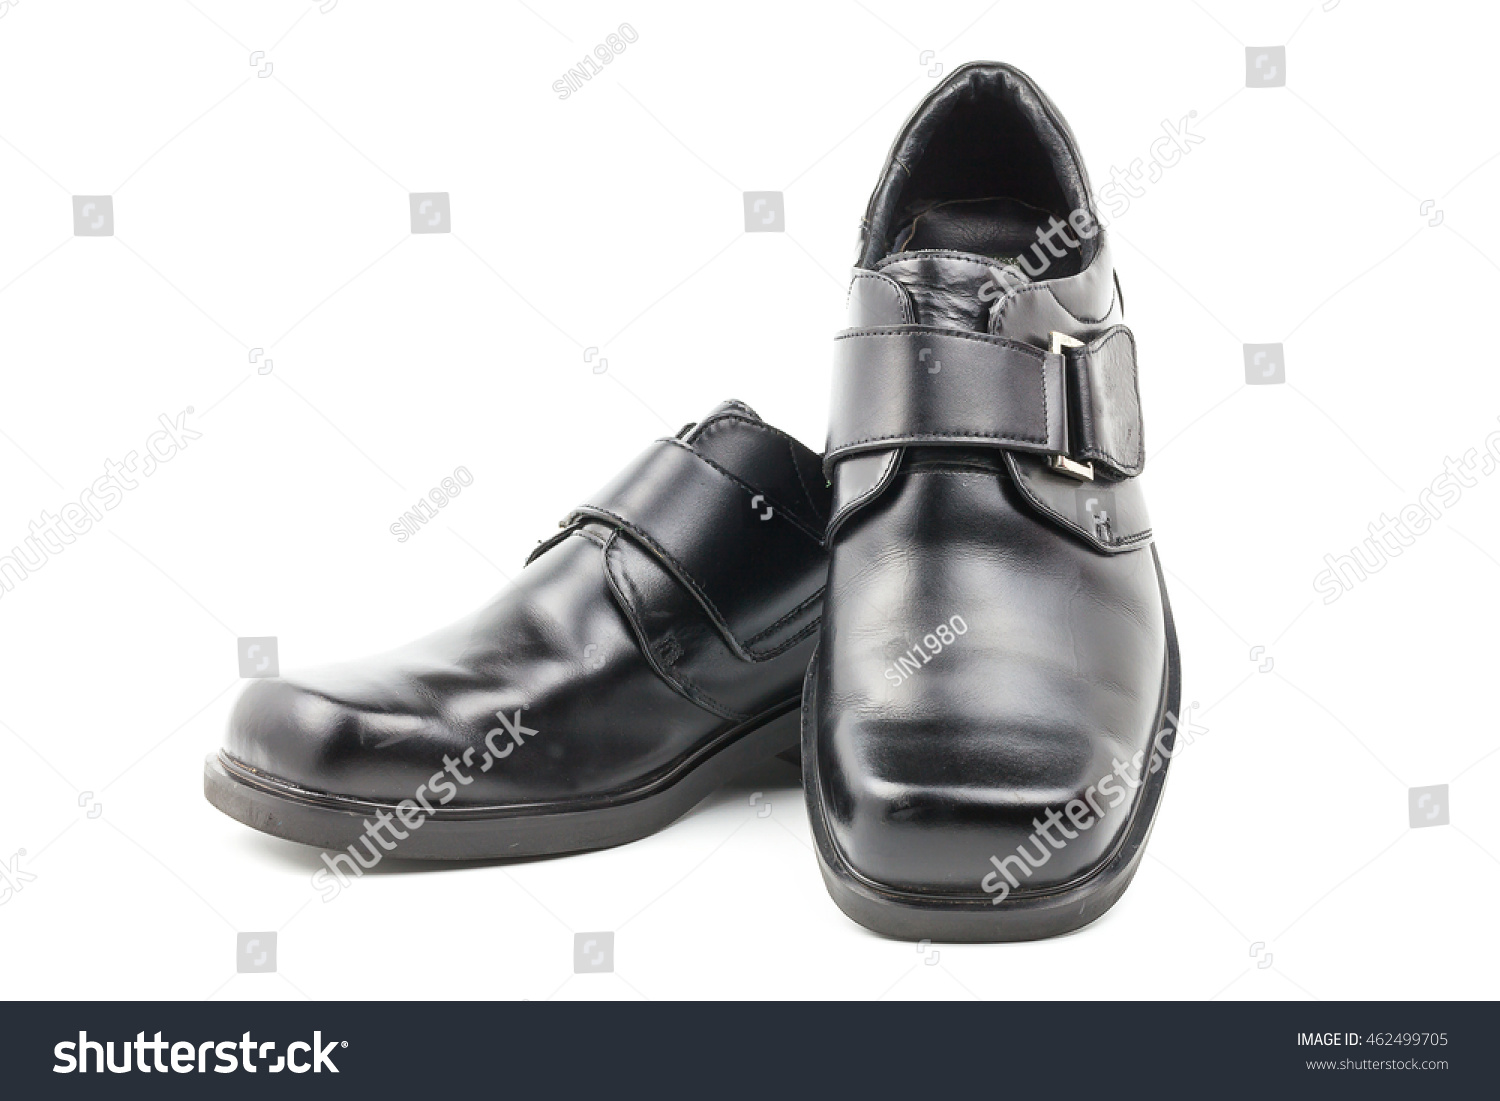 Black Shiny Shoes On White Background Stock Photo 462499705 | Shutterstock